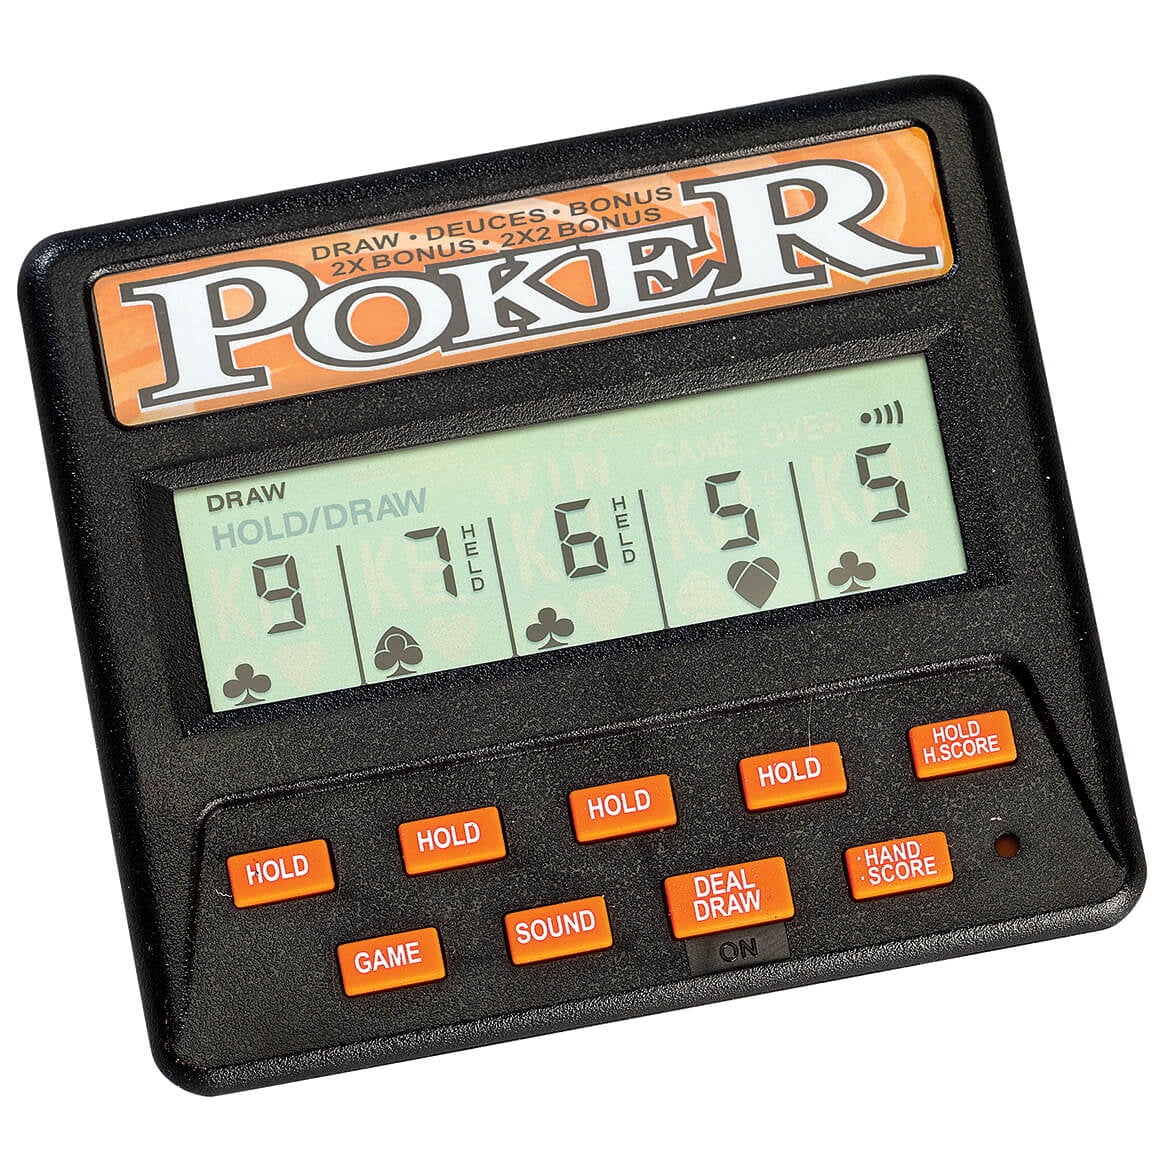 Radica Bonus & Draw Poker Model #1317 Handheld Electronic Game 2 Games in 1 for sale online 